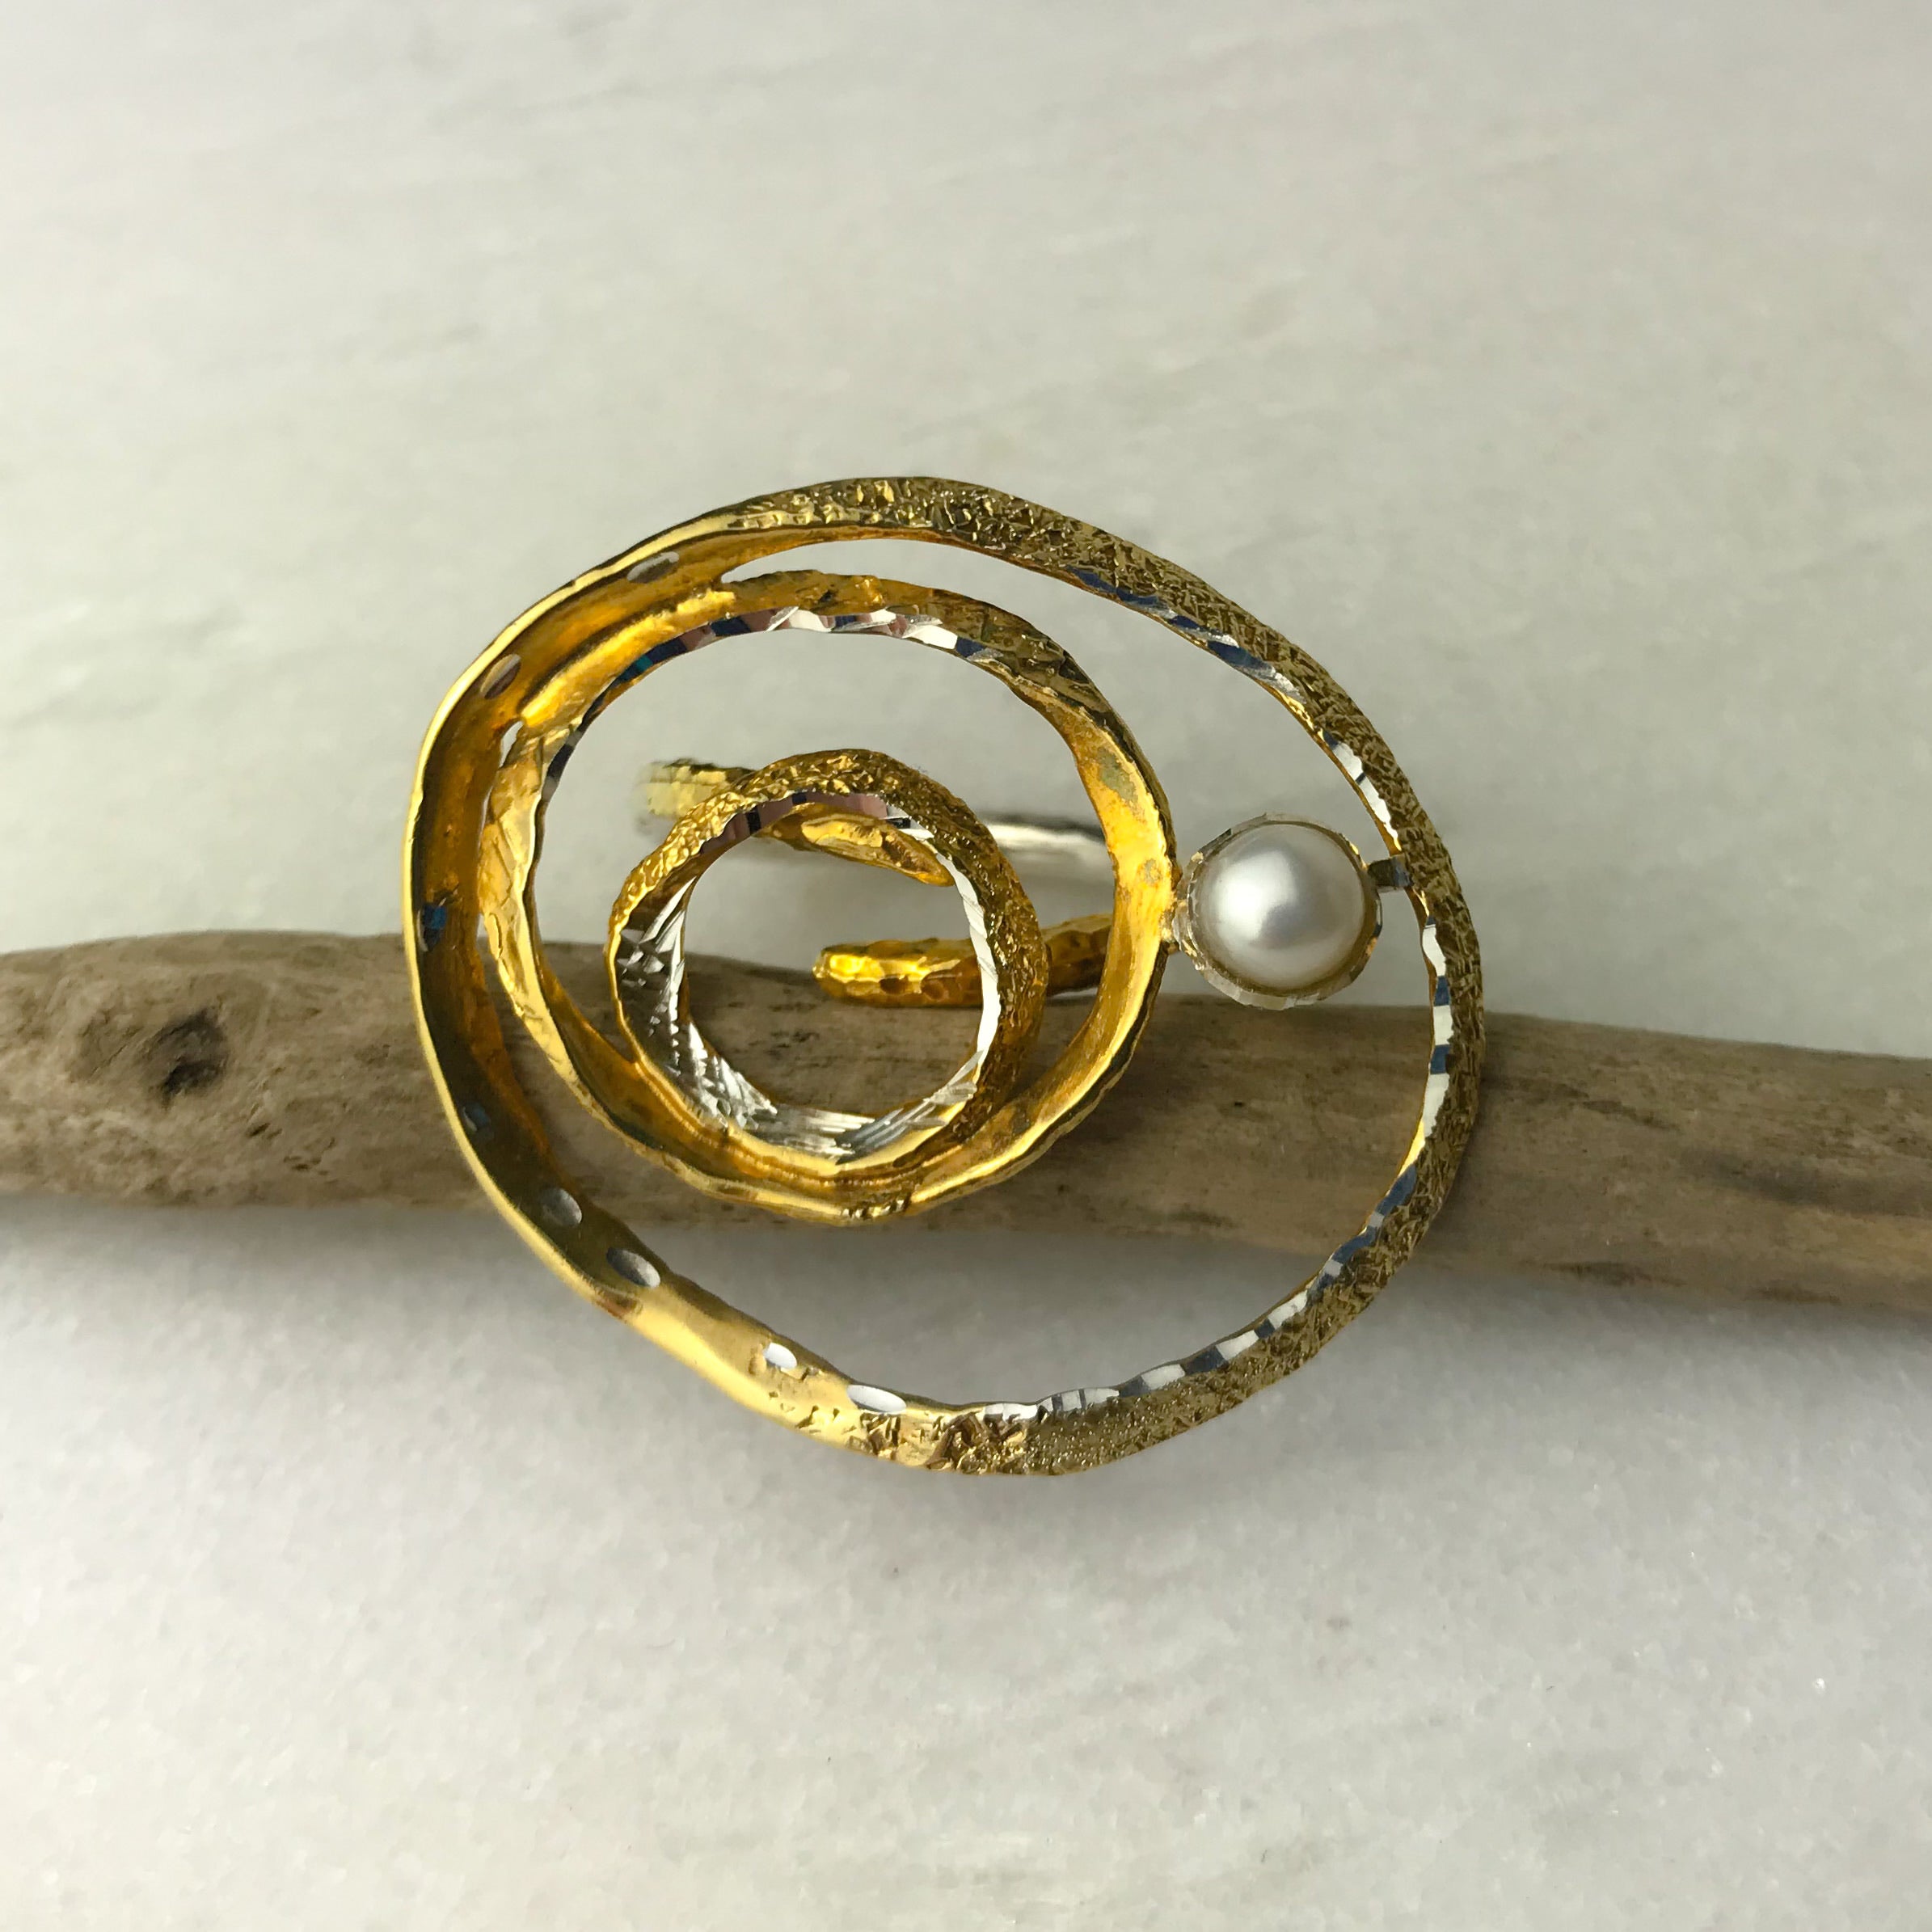 Pearl Swirl Ring - The Nancy Smillie Shop - Art, Jewellery & Designer Gifts Glasgow